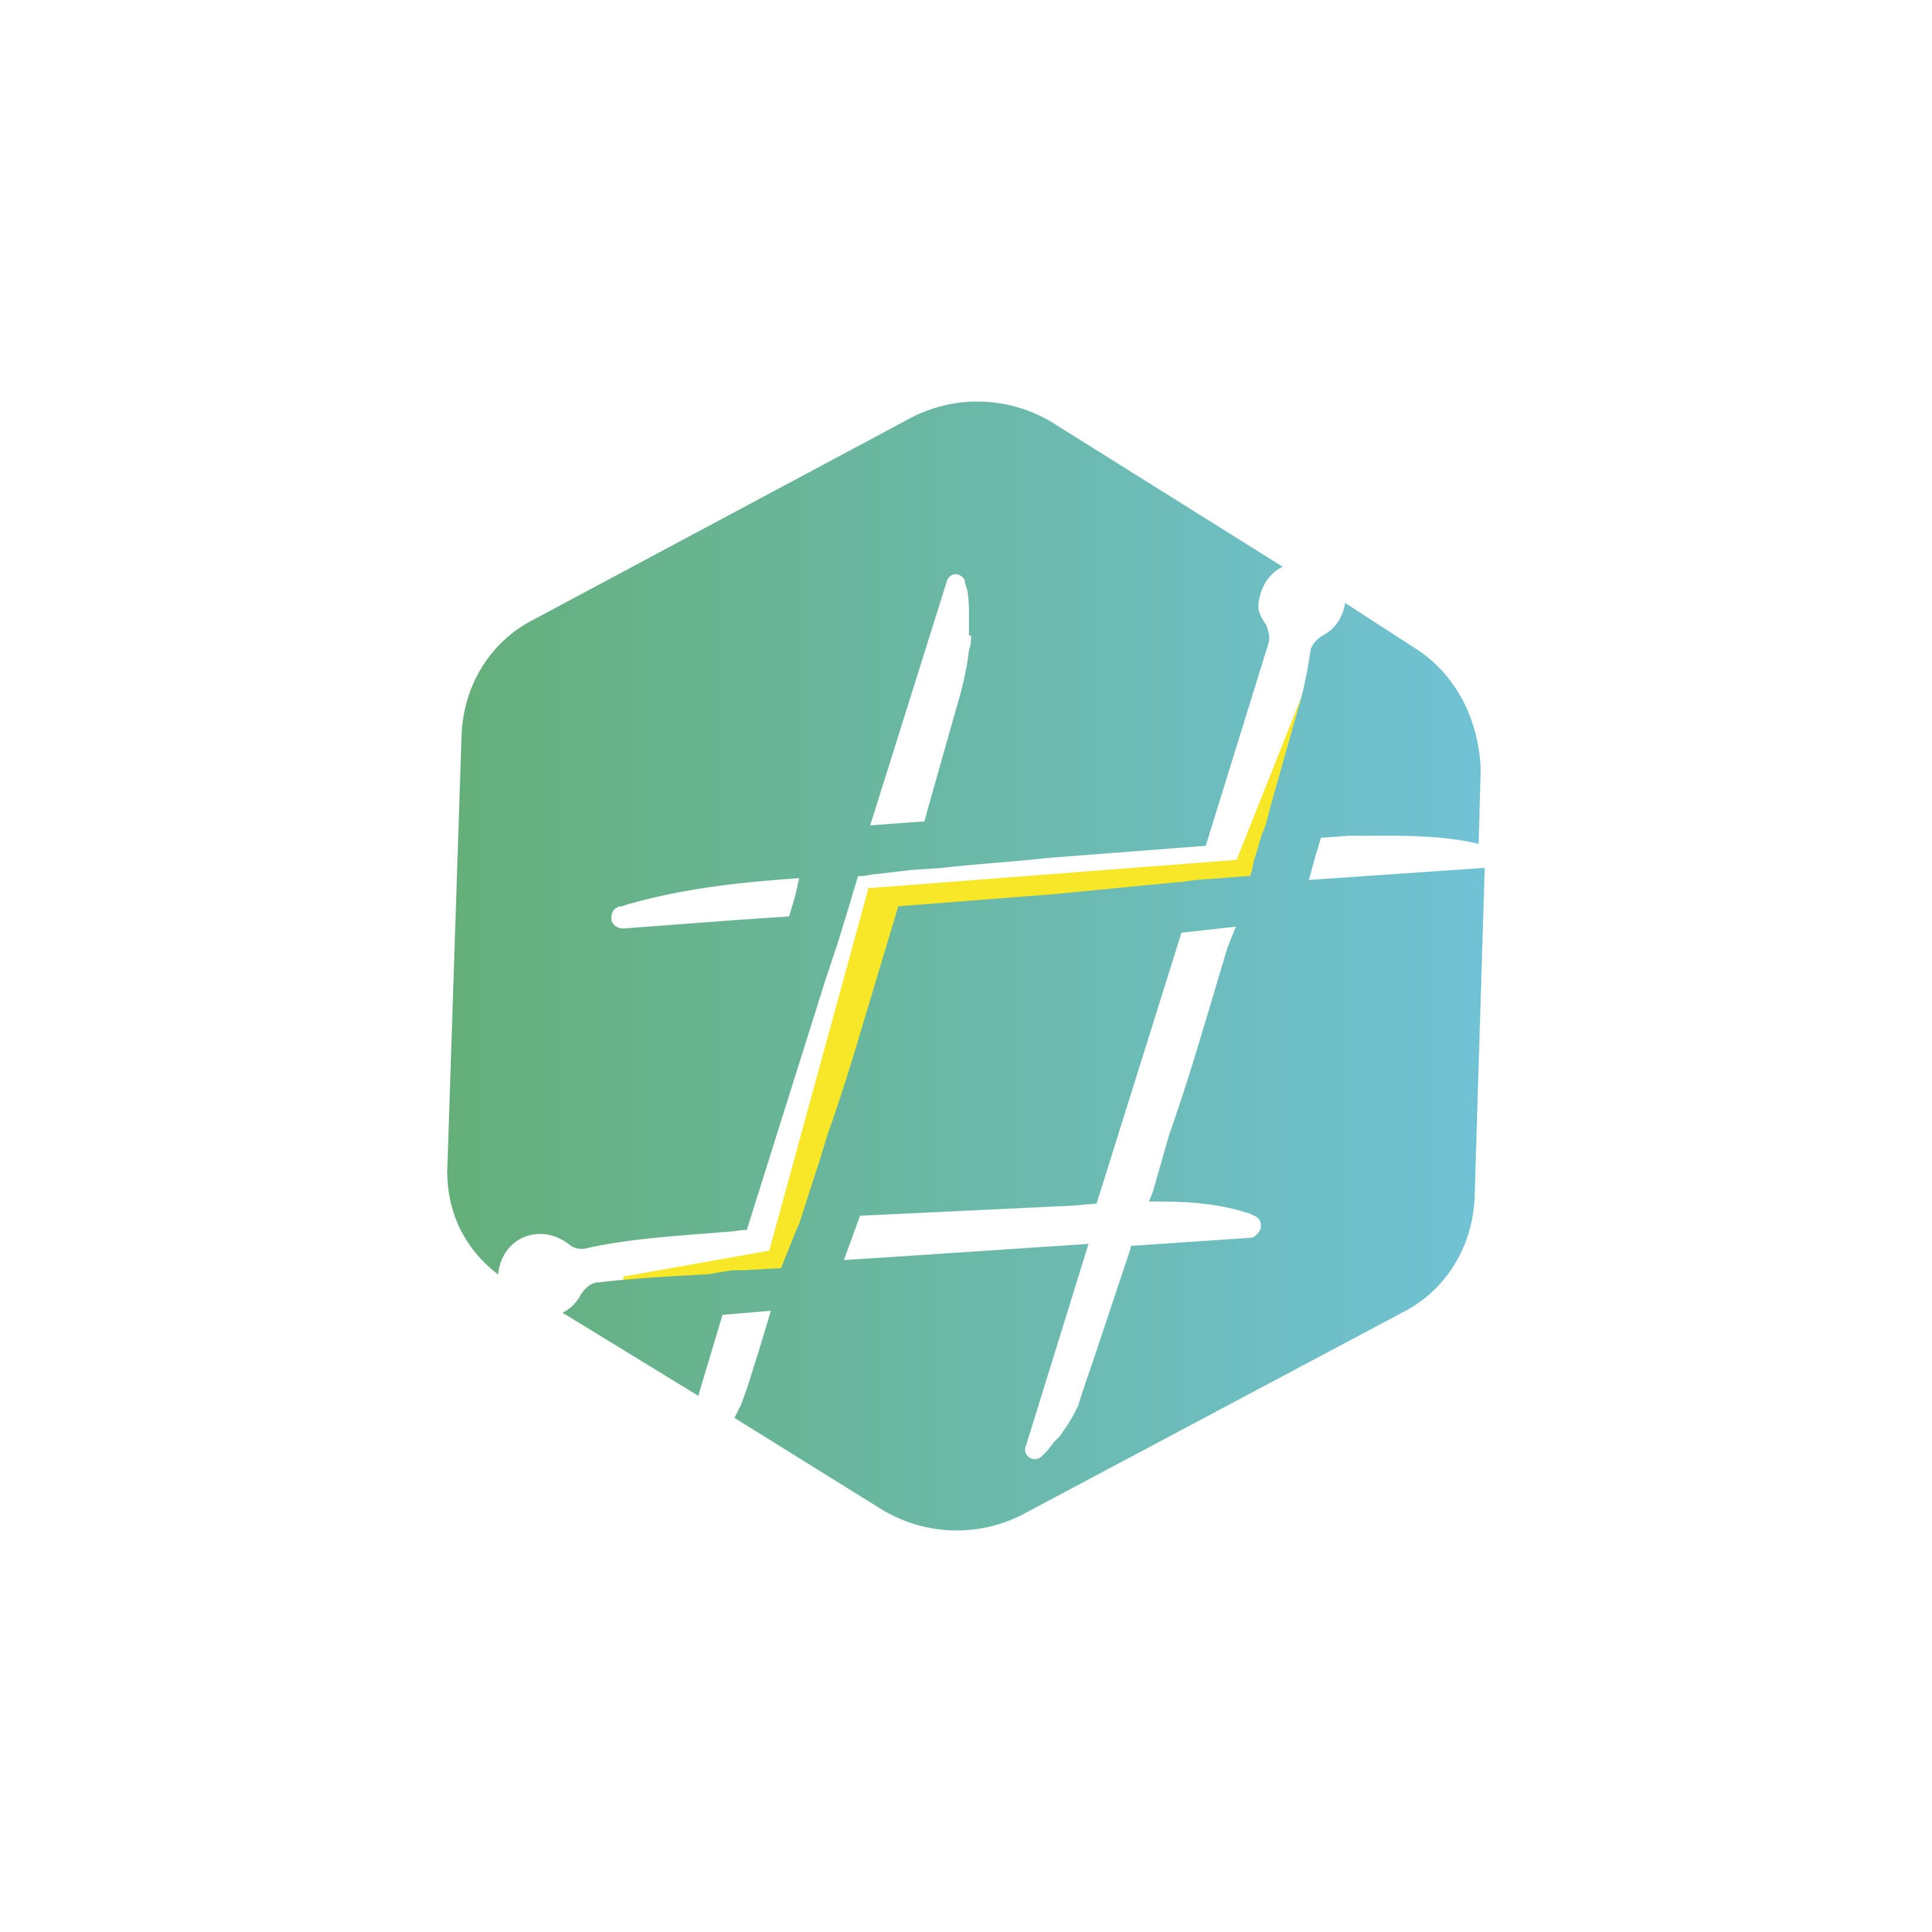 Wersel Data-Hub - powerful brand collaborative & analytics platform